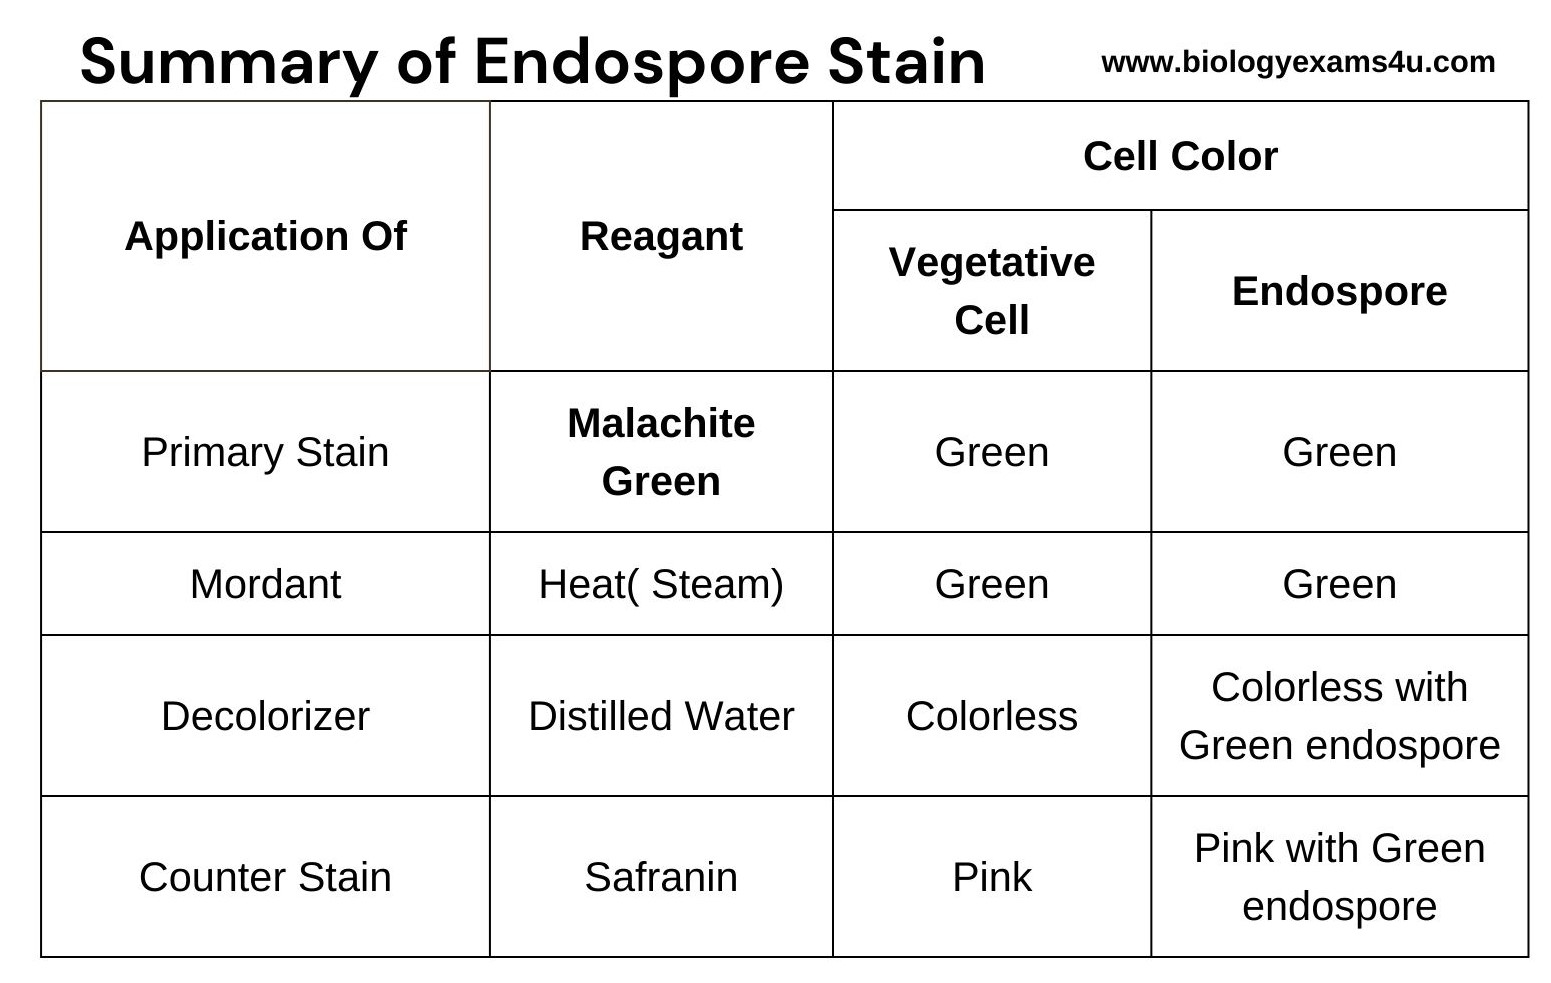 Summary of Endospore Staining